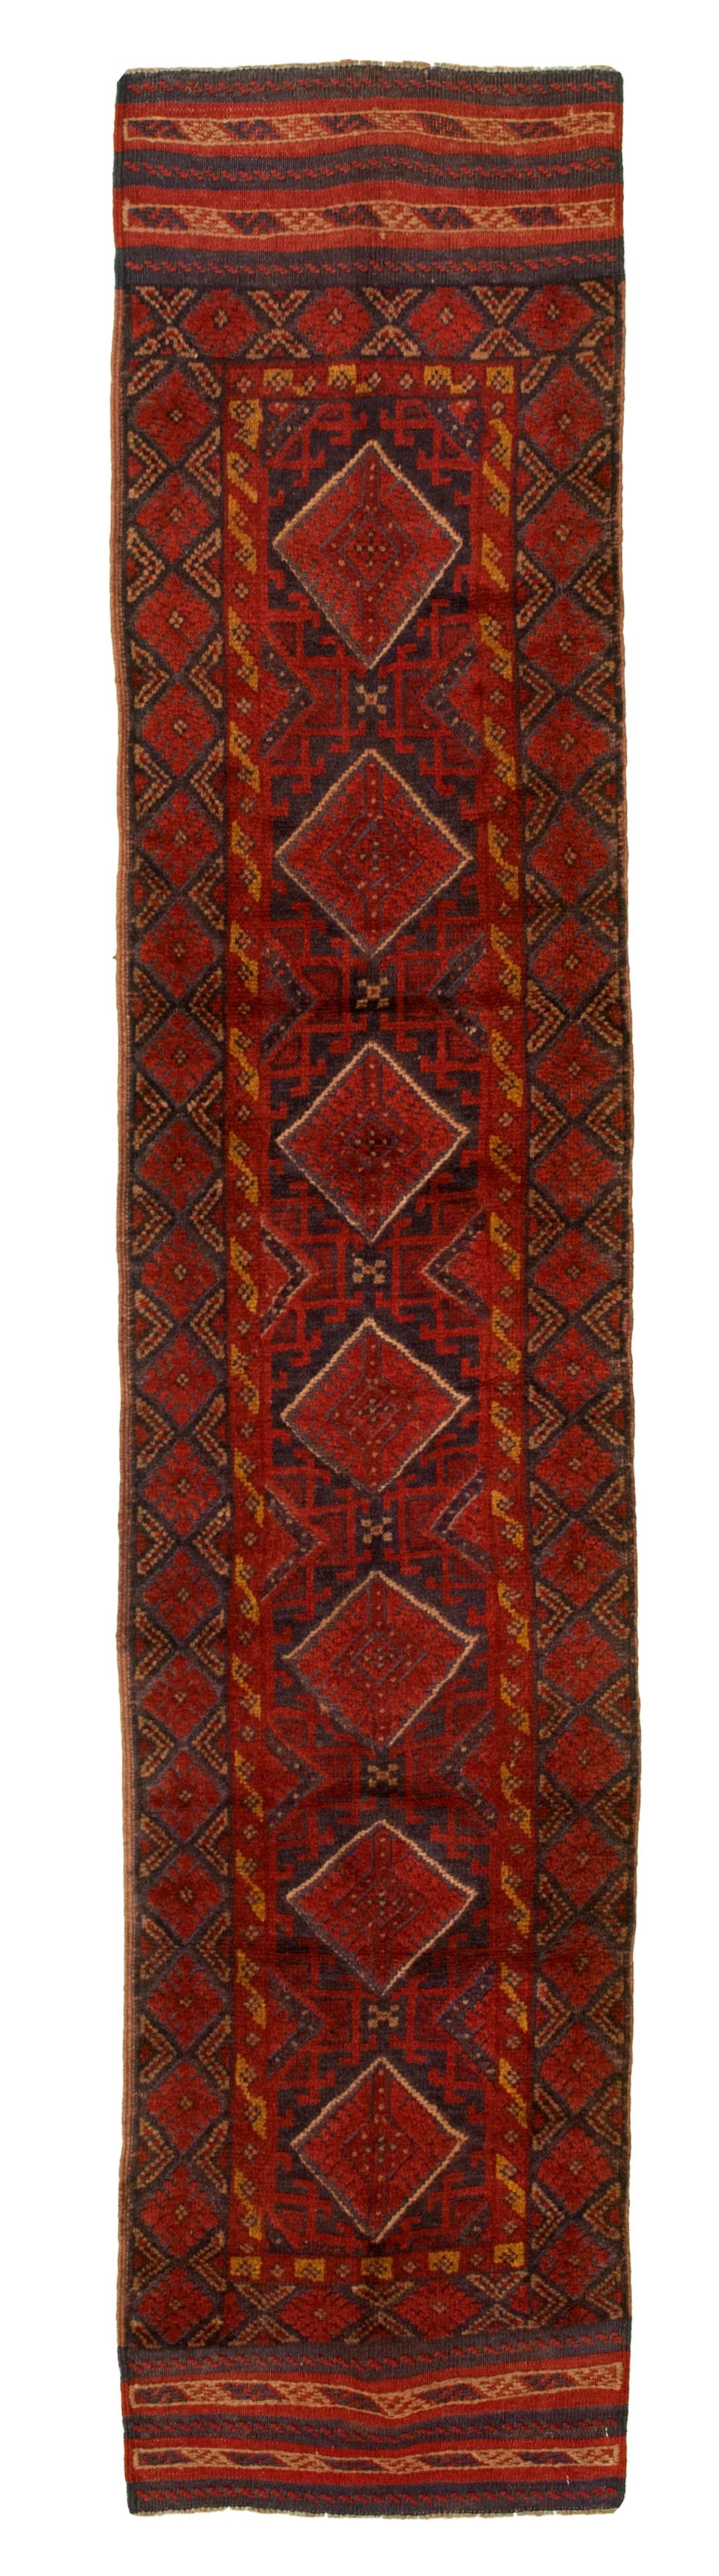 Hand-knotted Tajik Caucasian Red Wool Rug 2'1" x 8'11"  Size: 2'1" x 8'11"  